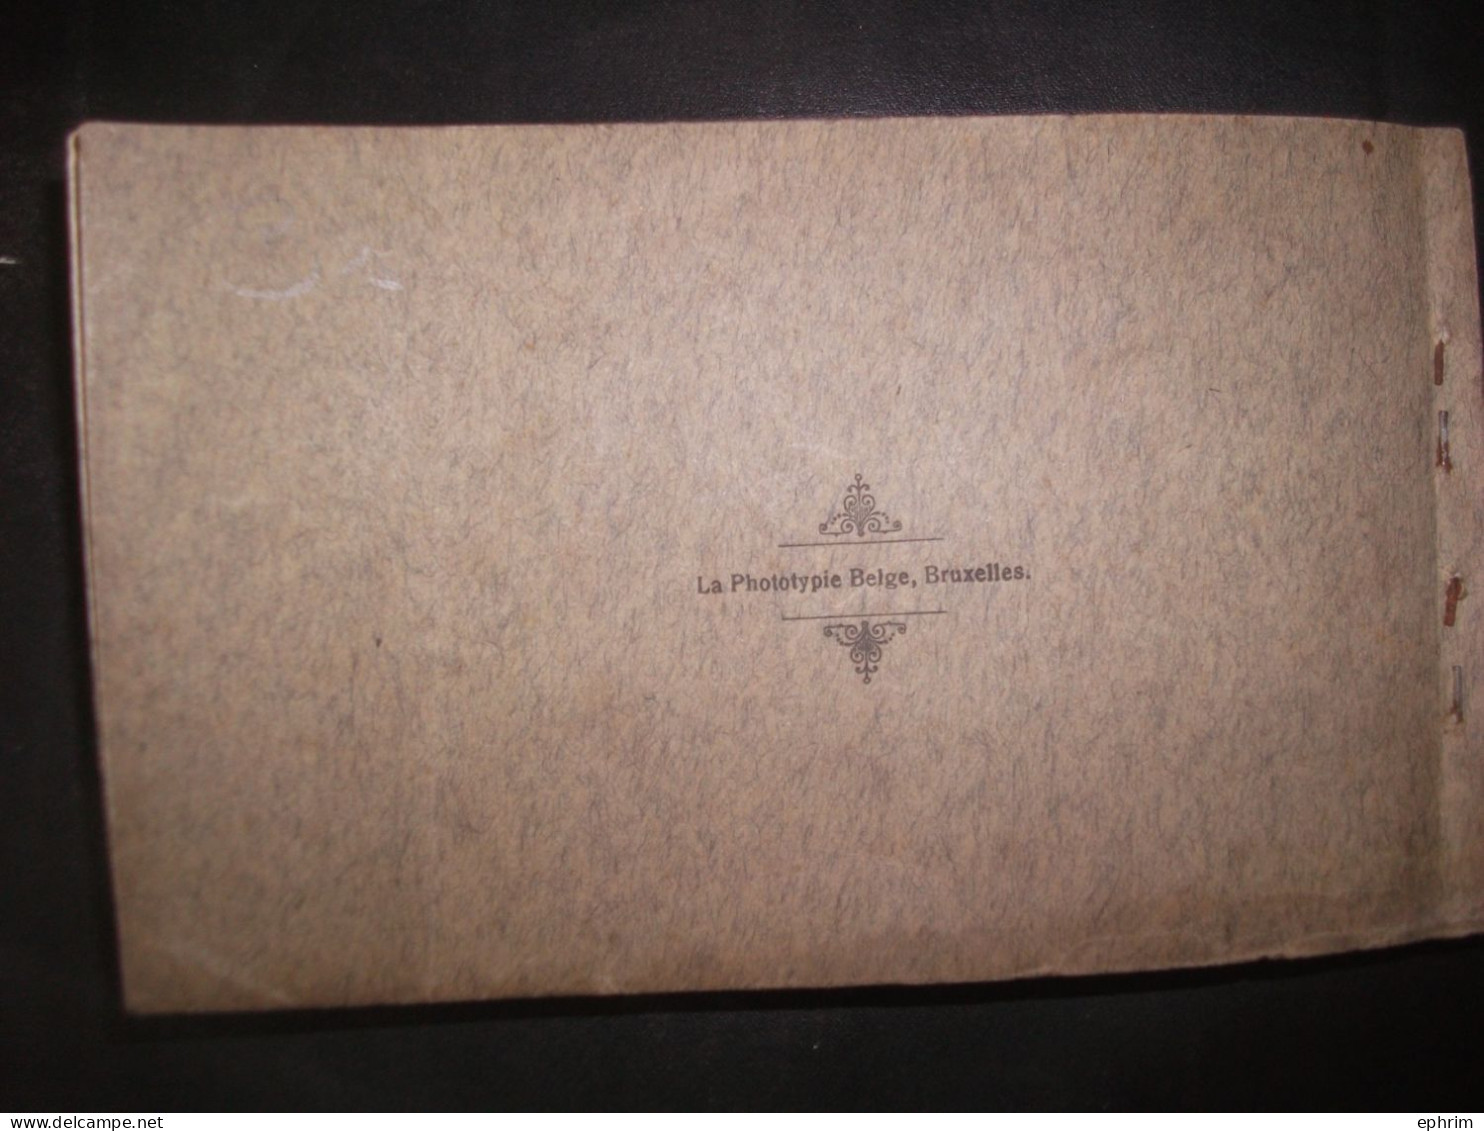 La Camp de Munsterlager Prisonniers de Guerre en Allemagne Carnet Complet 20 Cartes Postales Lager Pow Gefangenenlager